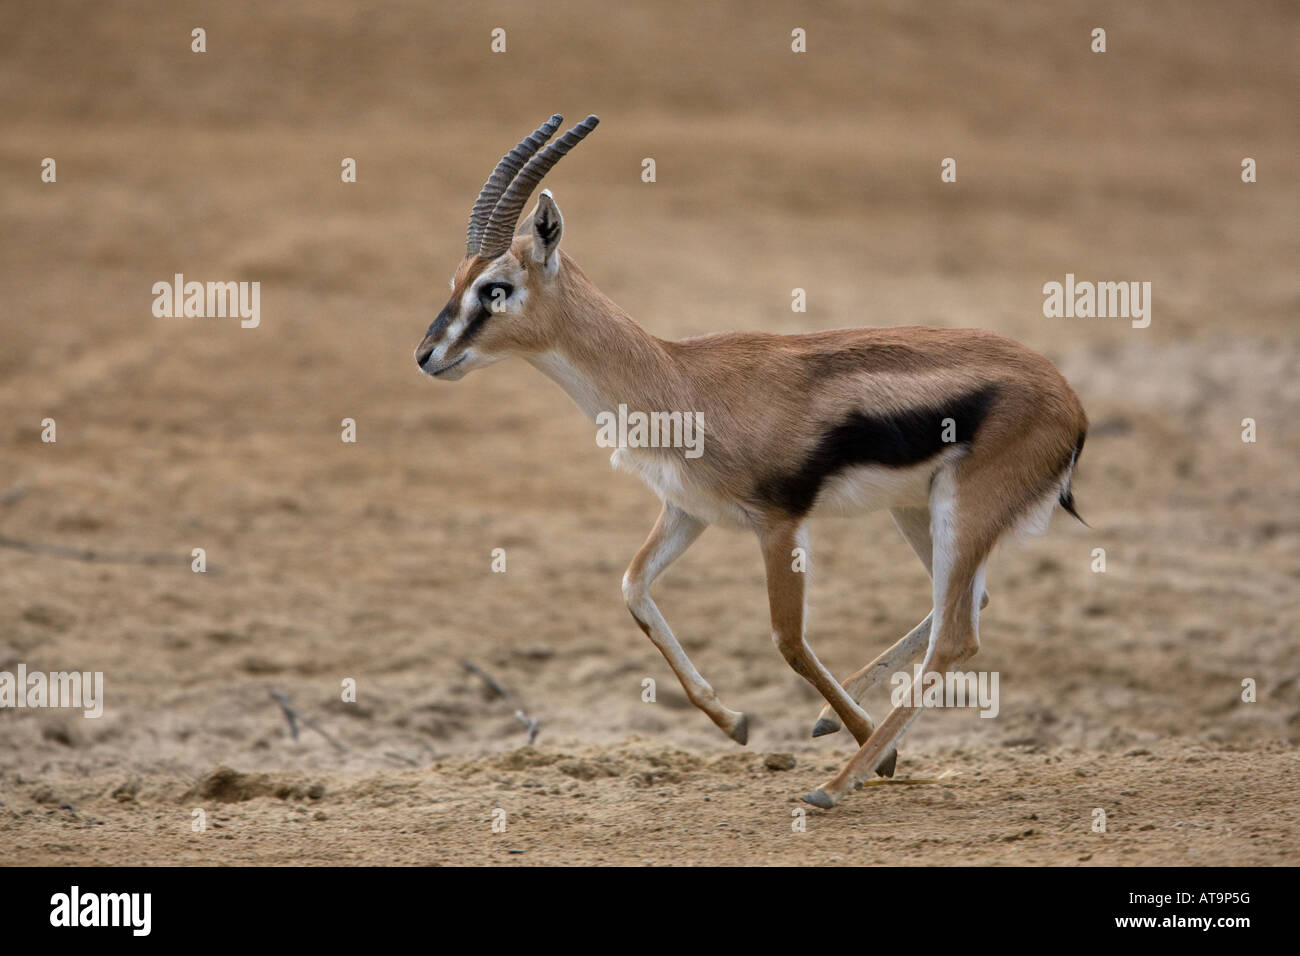 Thomson's gazelle running full speed - Gazella thomsoni Stock Photo